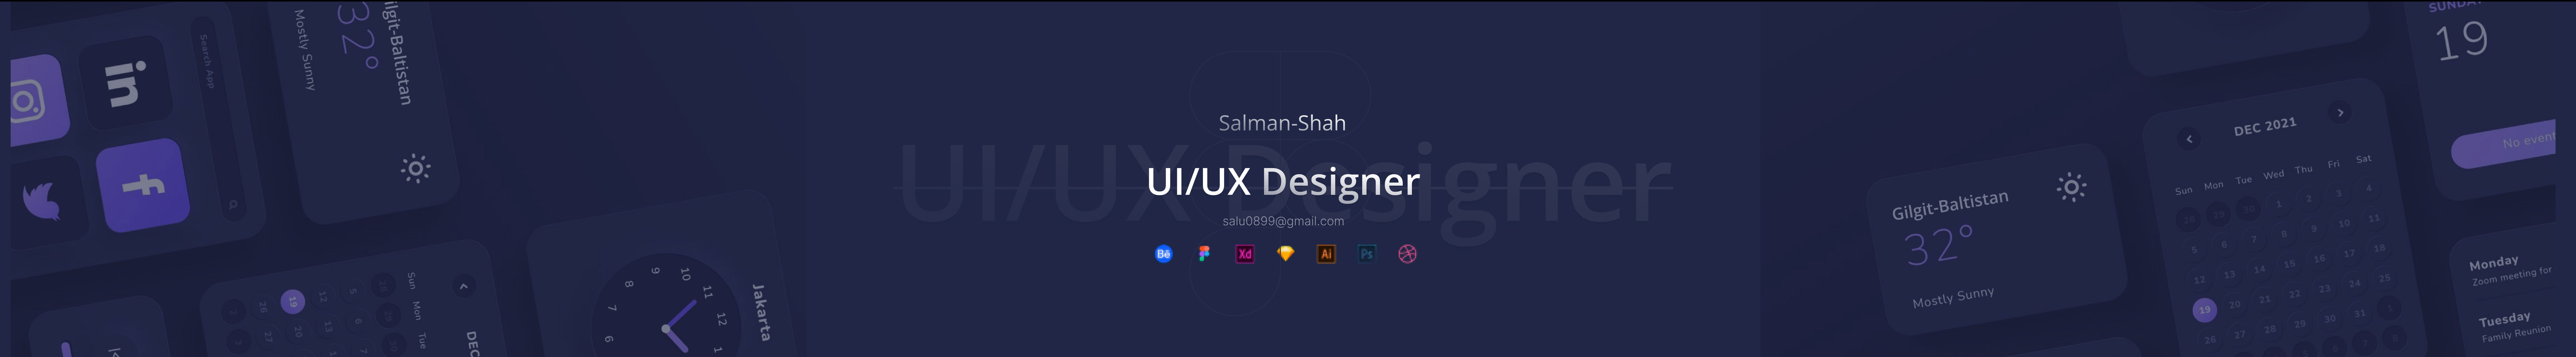 Salman-Shah ✪'s profile banner